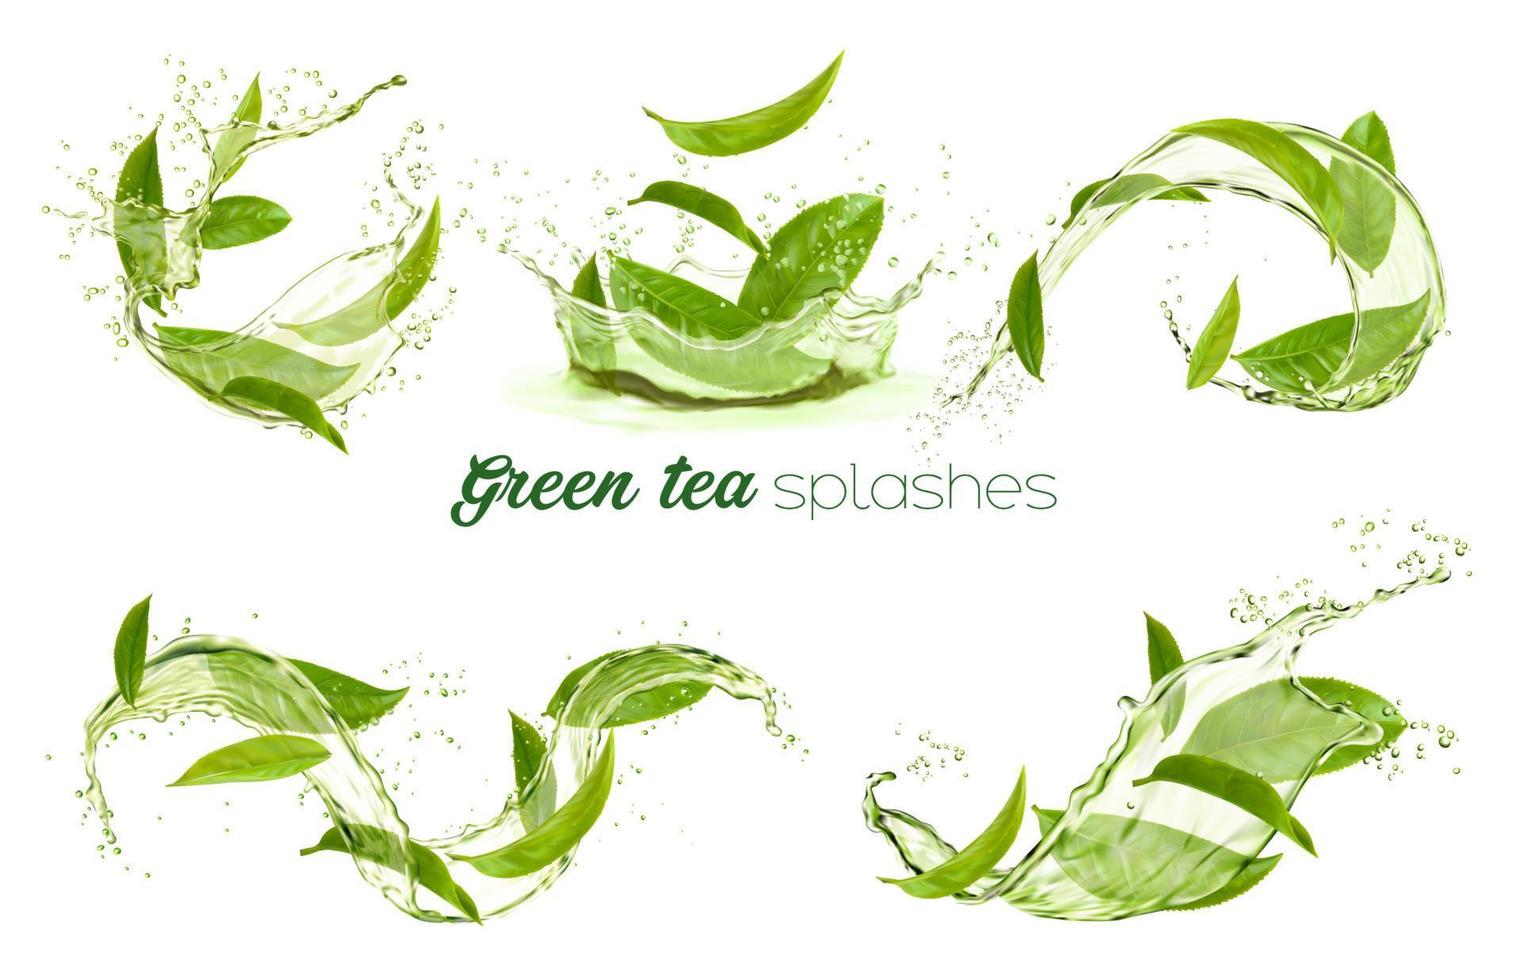 Green tea leaves swirls and splashes, transparent vector